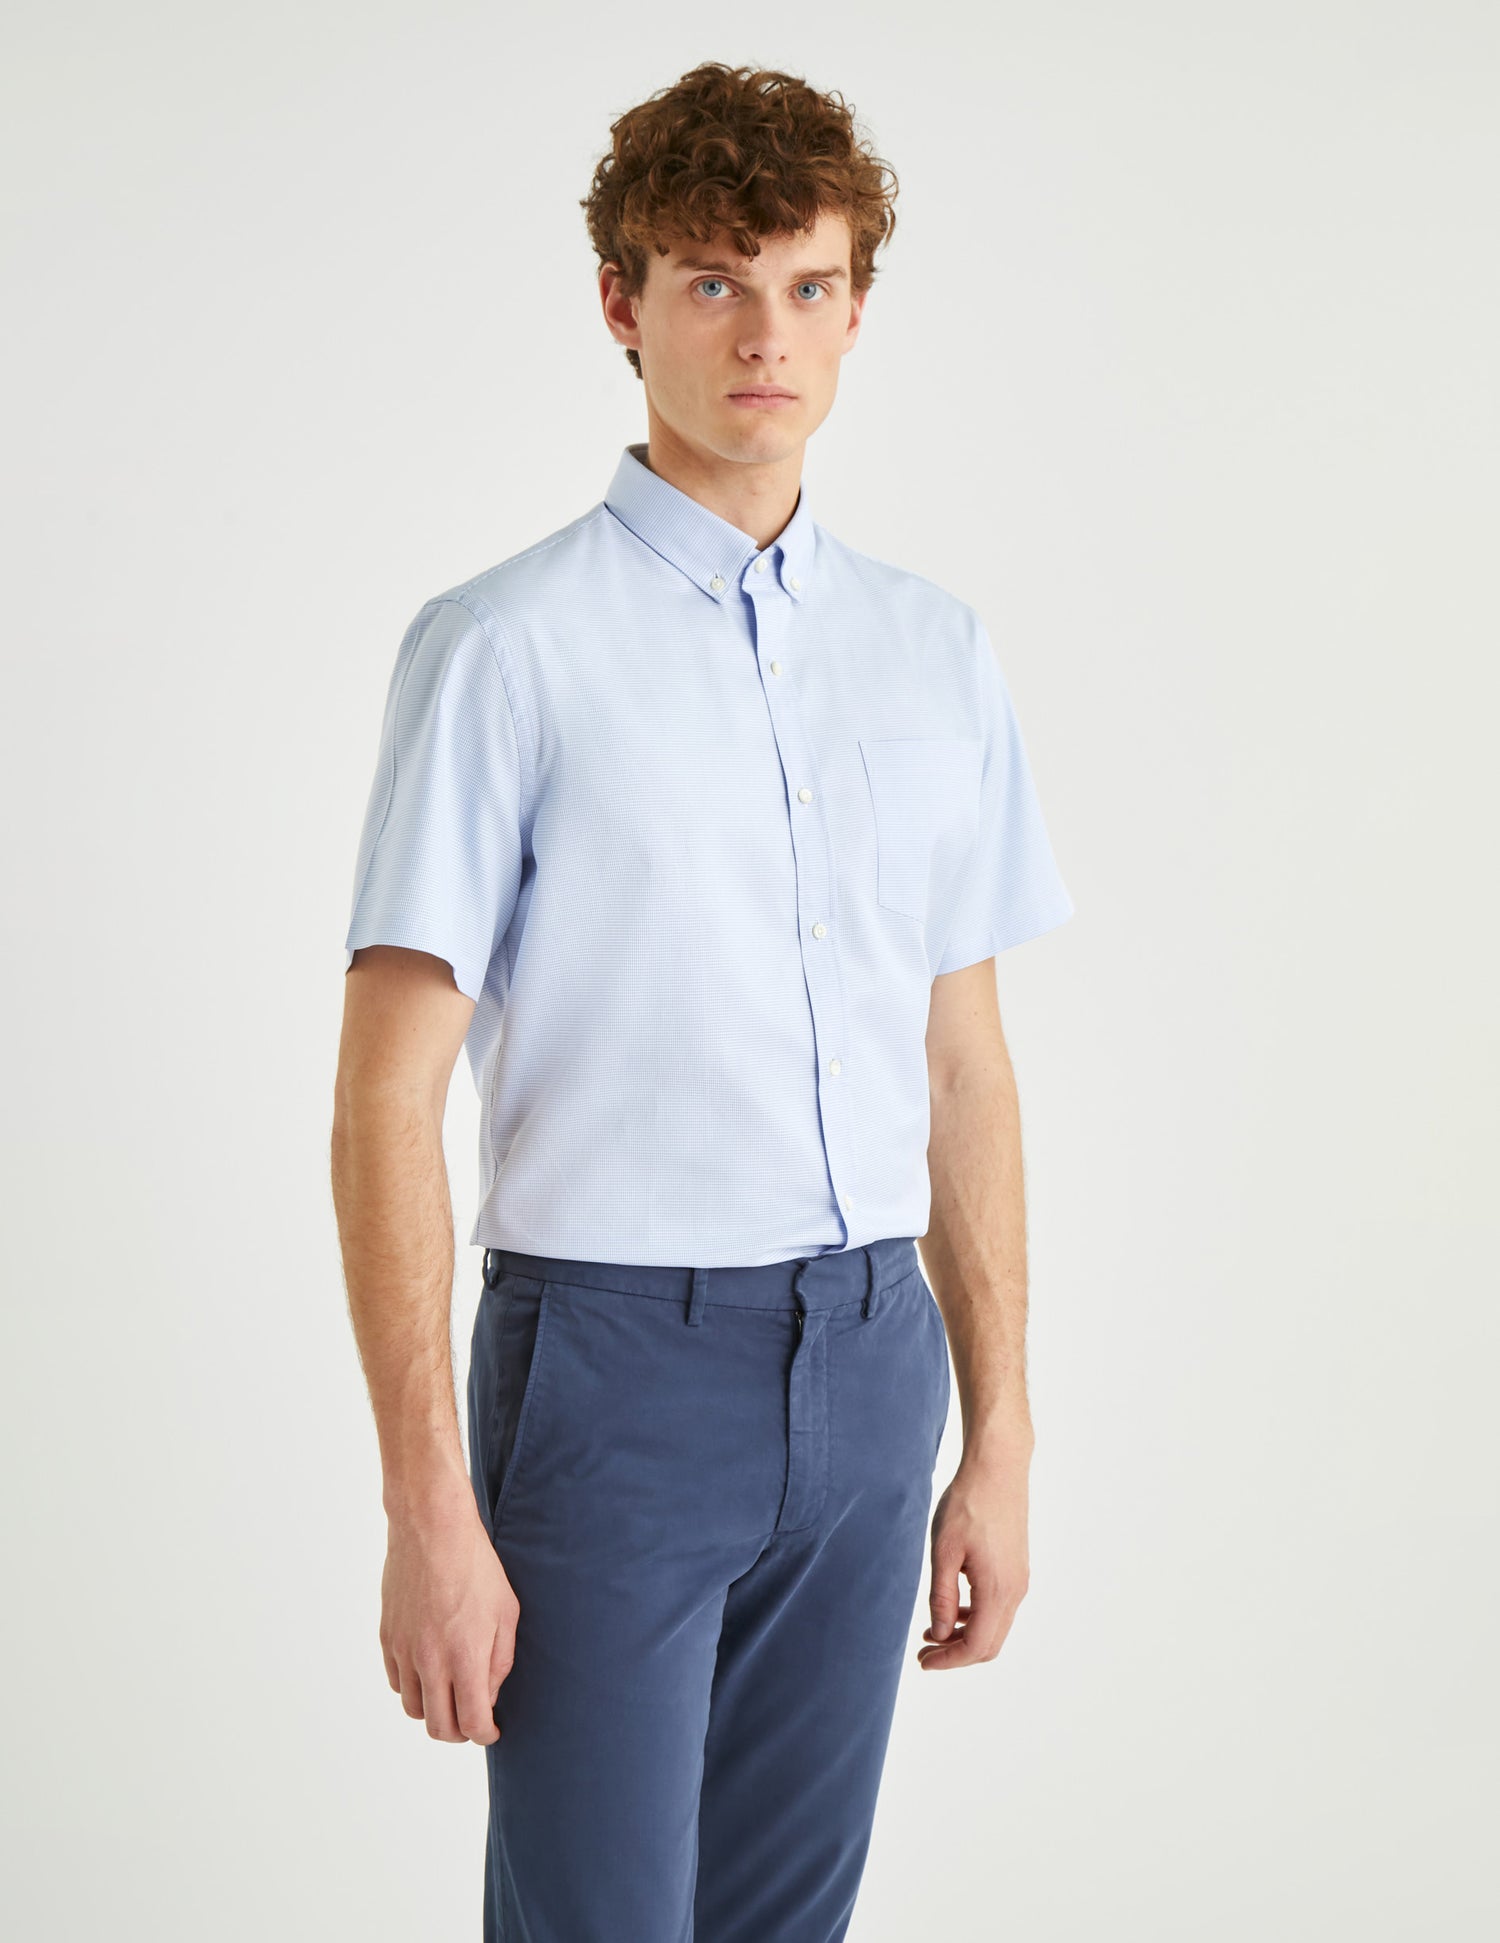 Classic shirt short sleeves blue - Shaped - American Collar#3